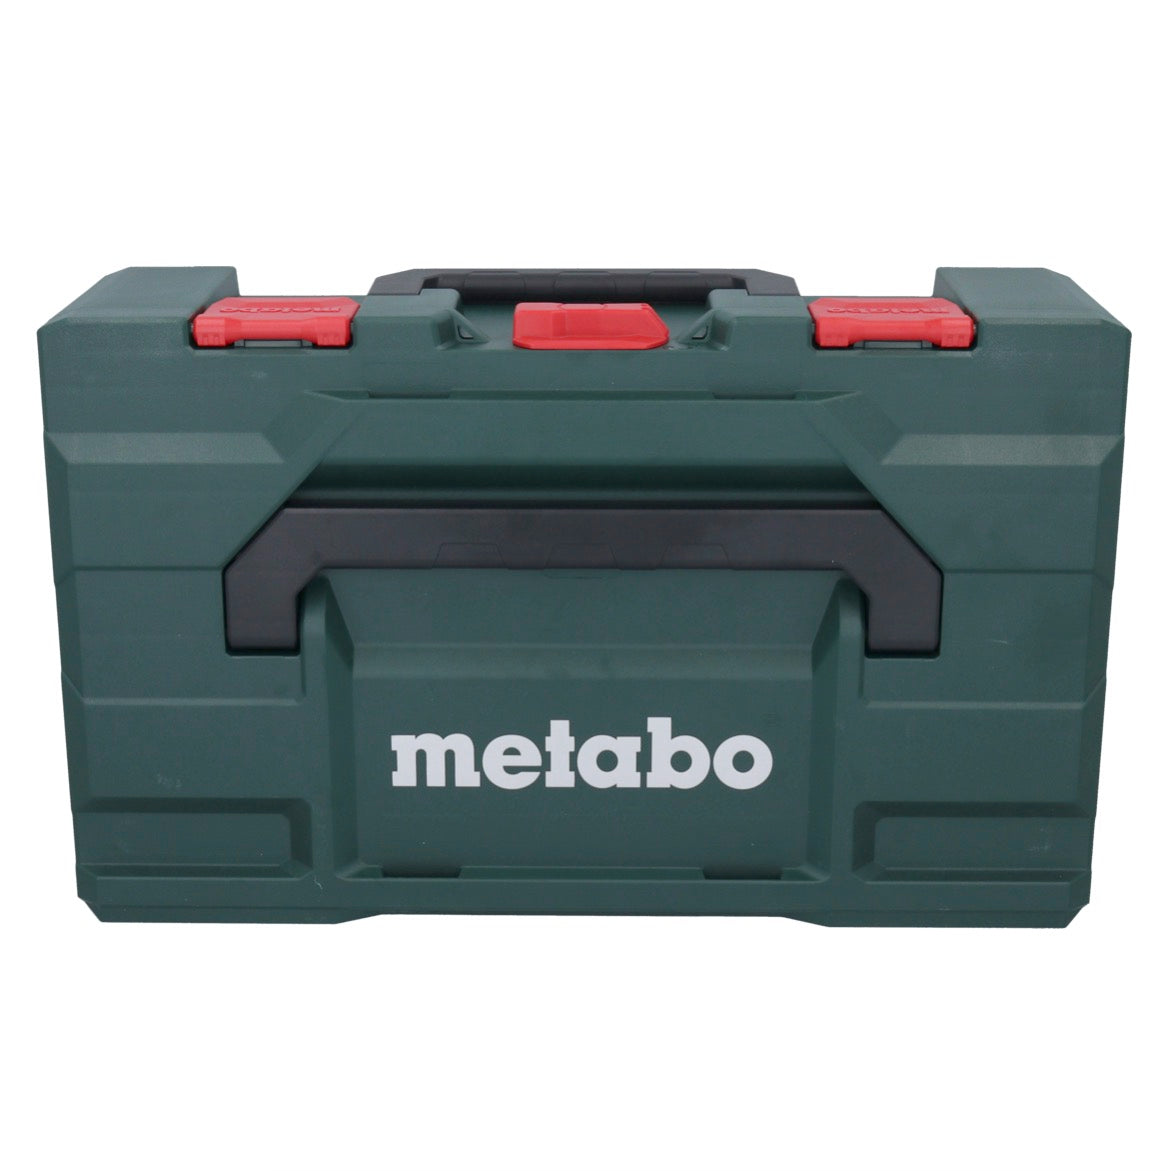 Metabo WPB 18 LT BL 11-125 Quick Akku Winkelschleifer 18 V 125 mm Brushless + metaBOX ( 613059840 ) - ohne Akku, ohne Ladegerät - Toolbrothers